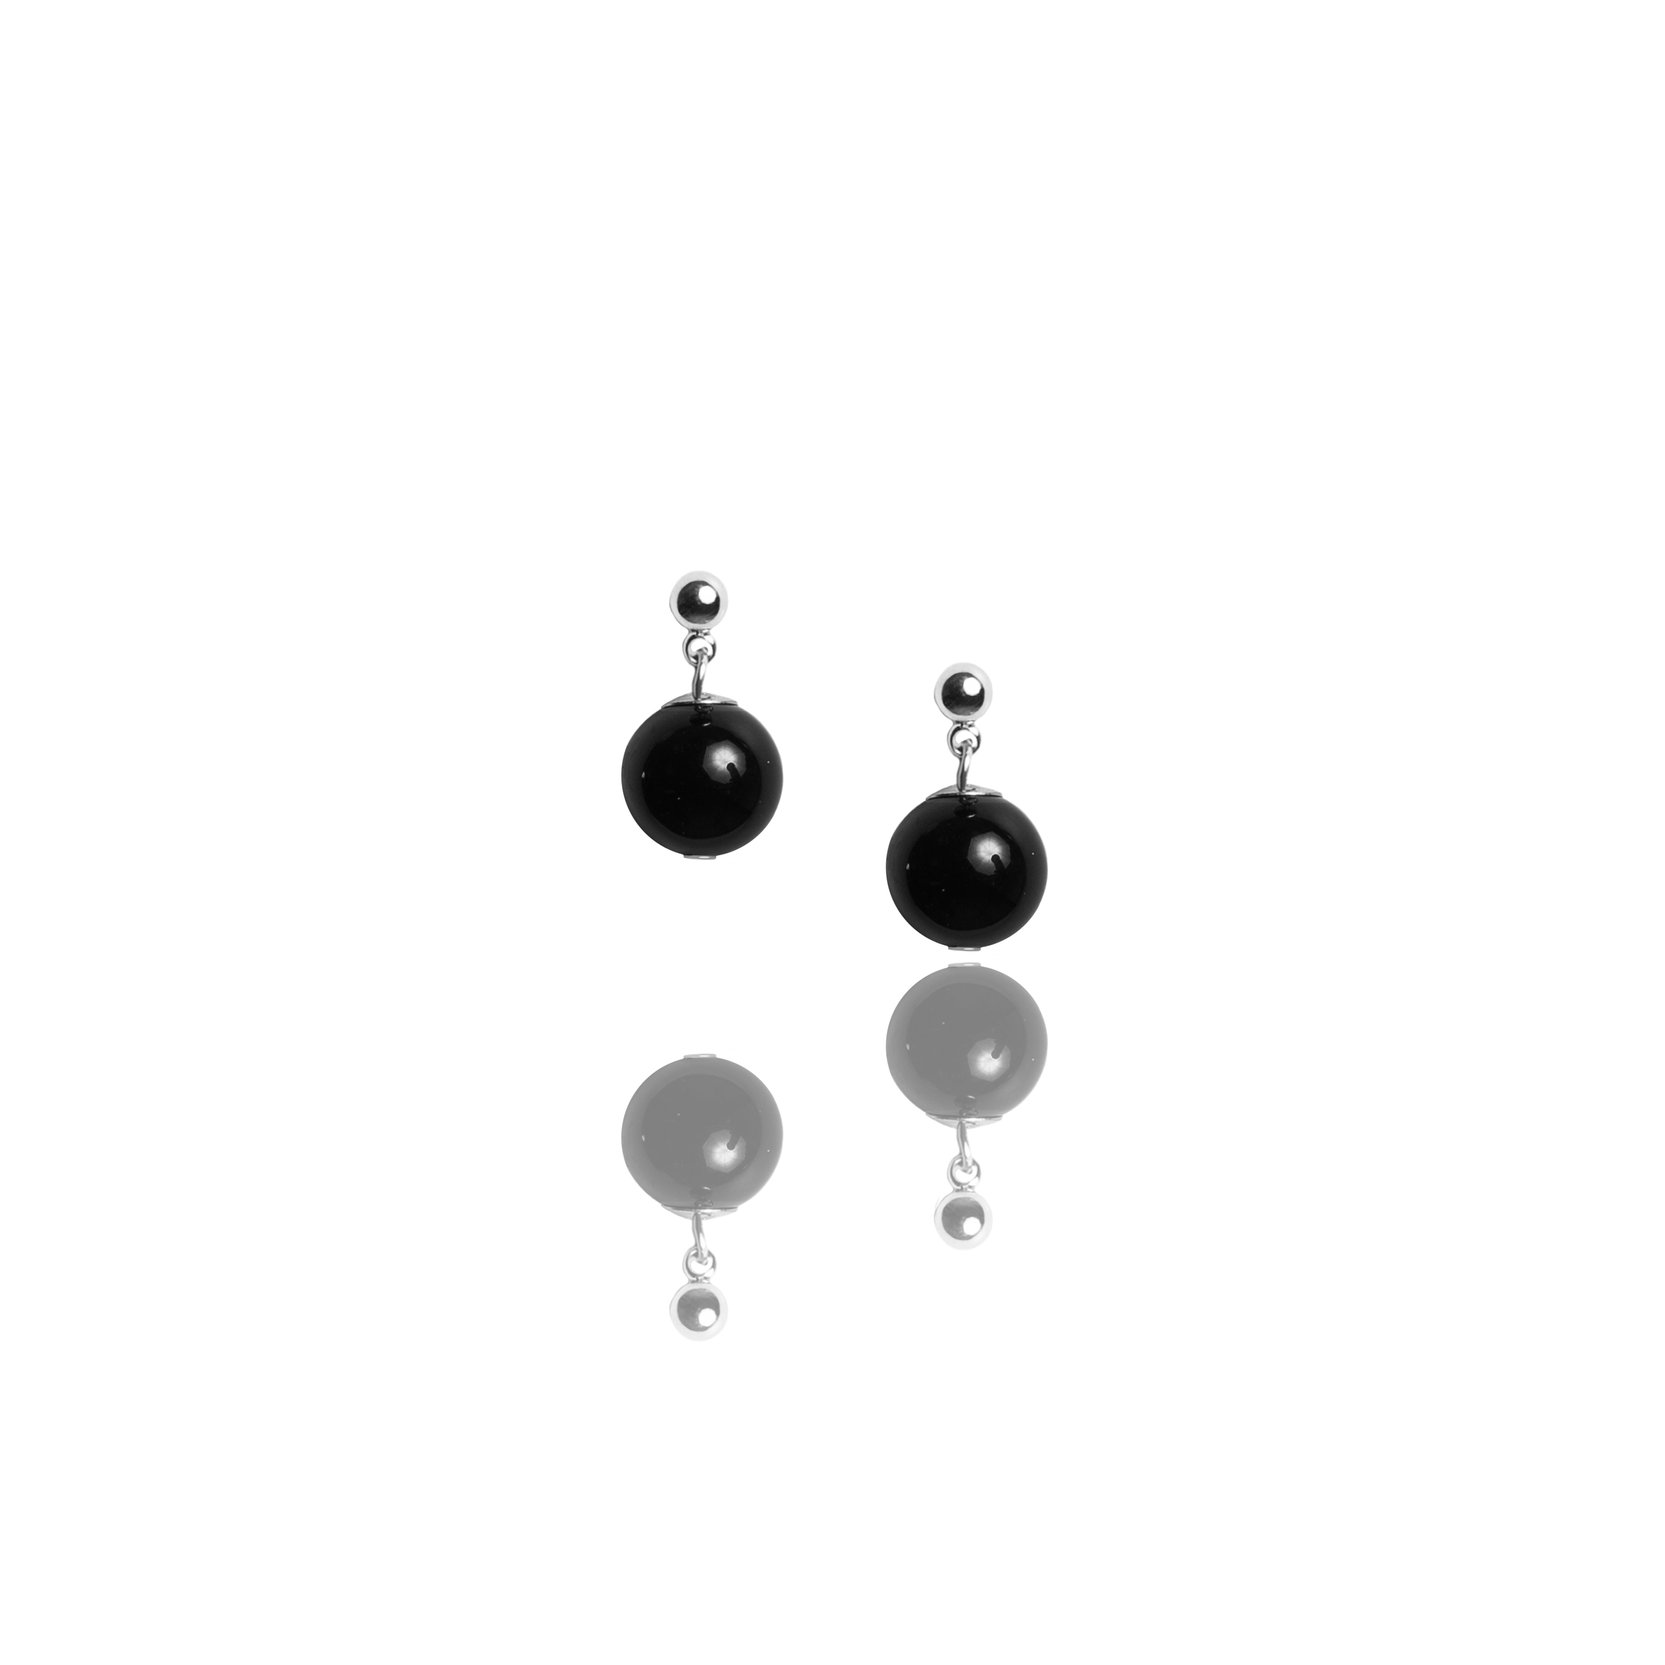 Stud earrings with black agates